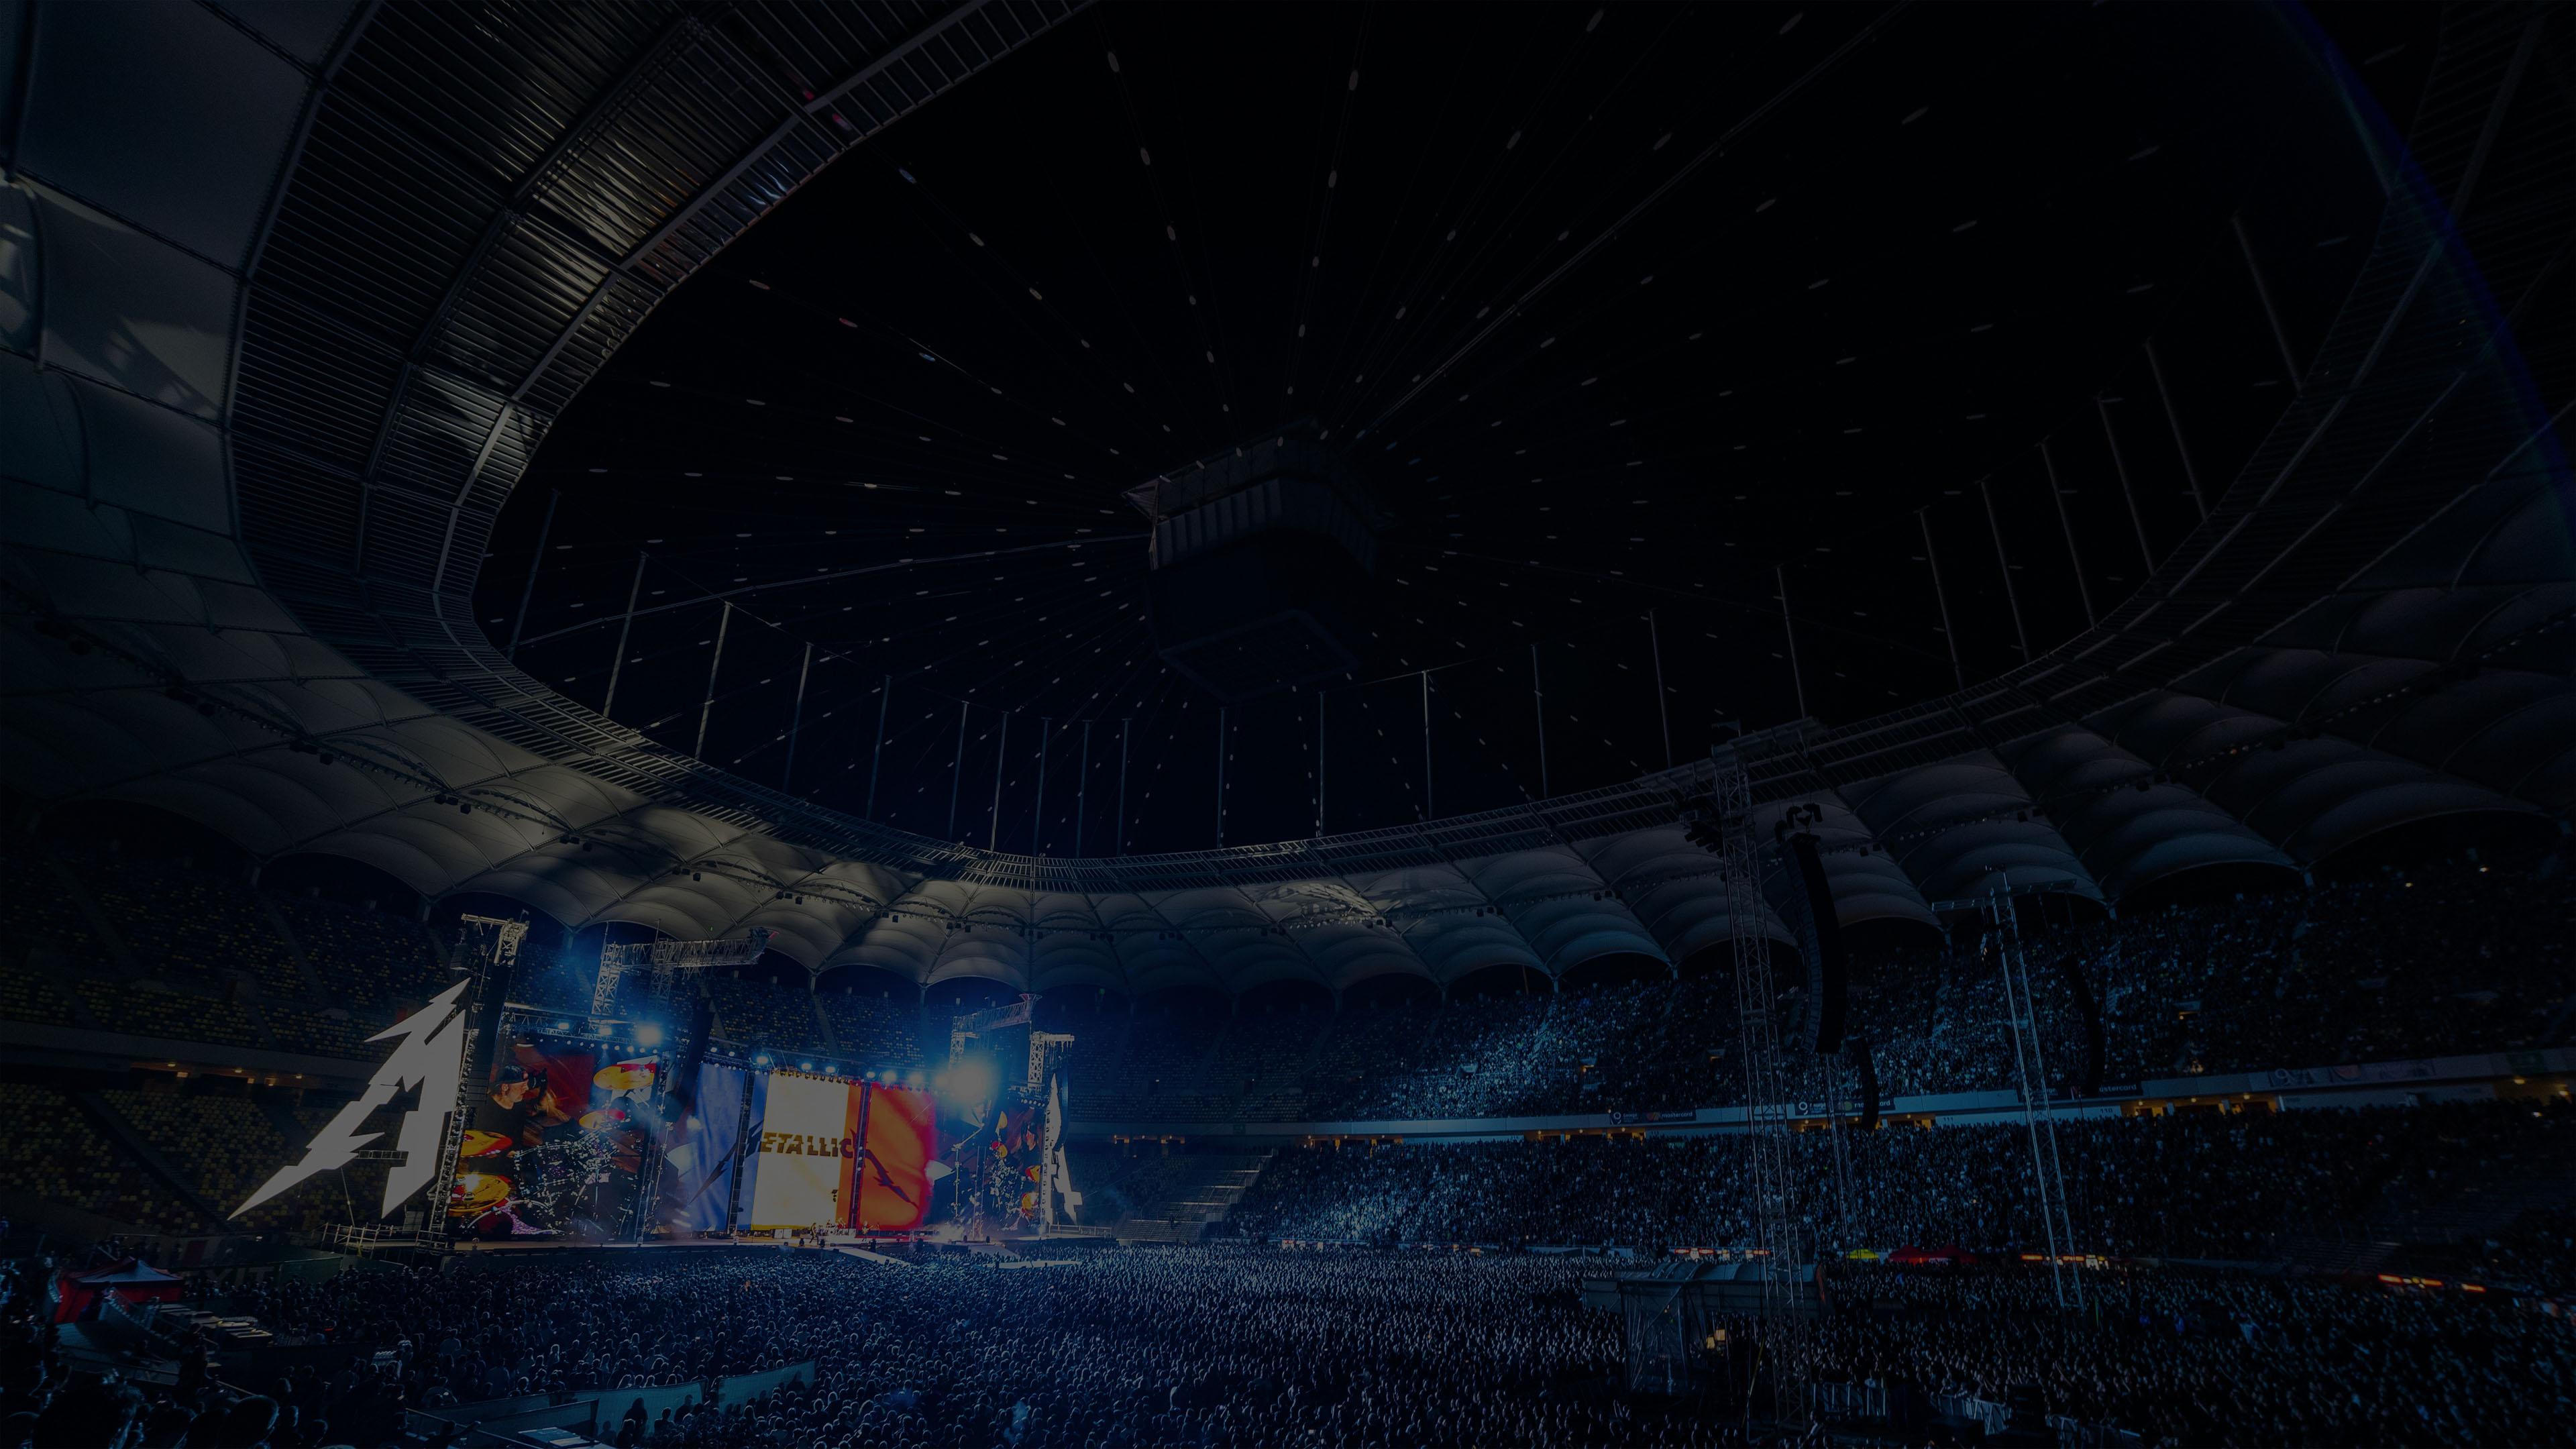 Metallica at Arena Națională in Bucharest, Romania on August 14, 2019